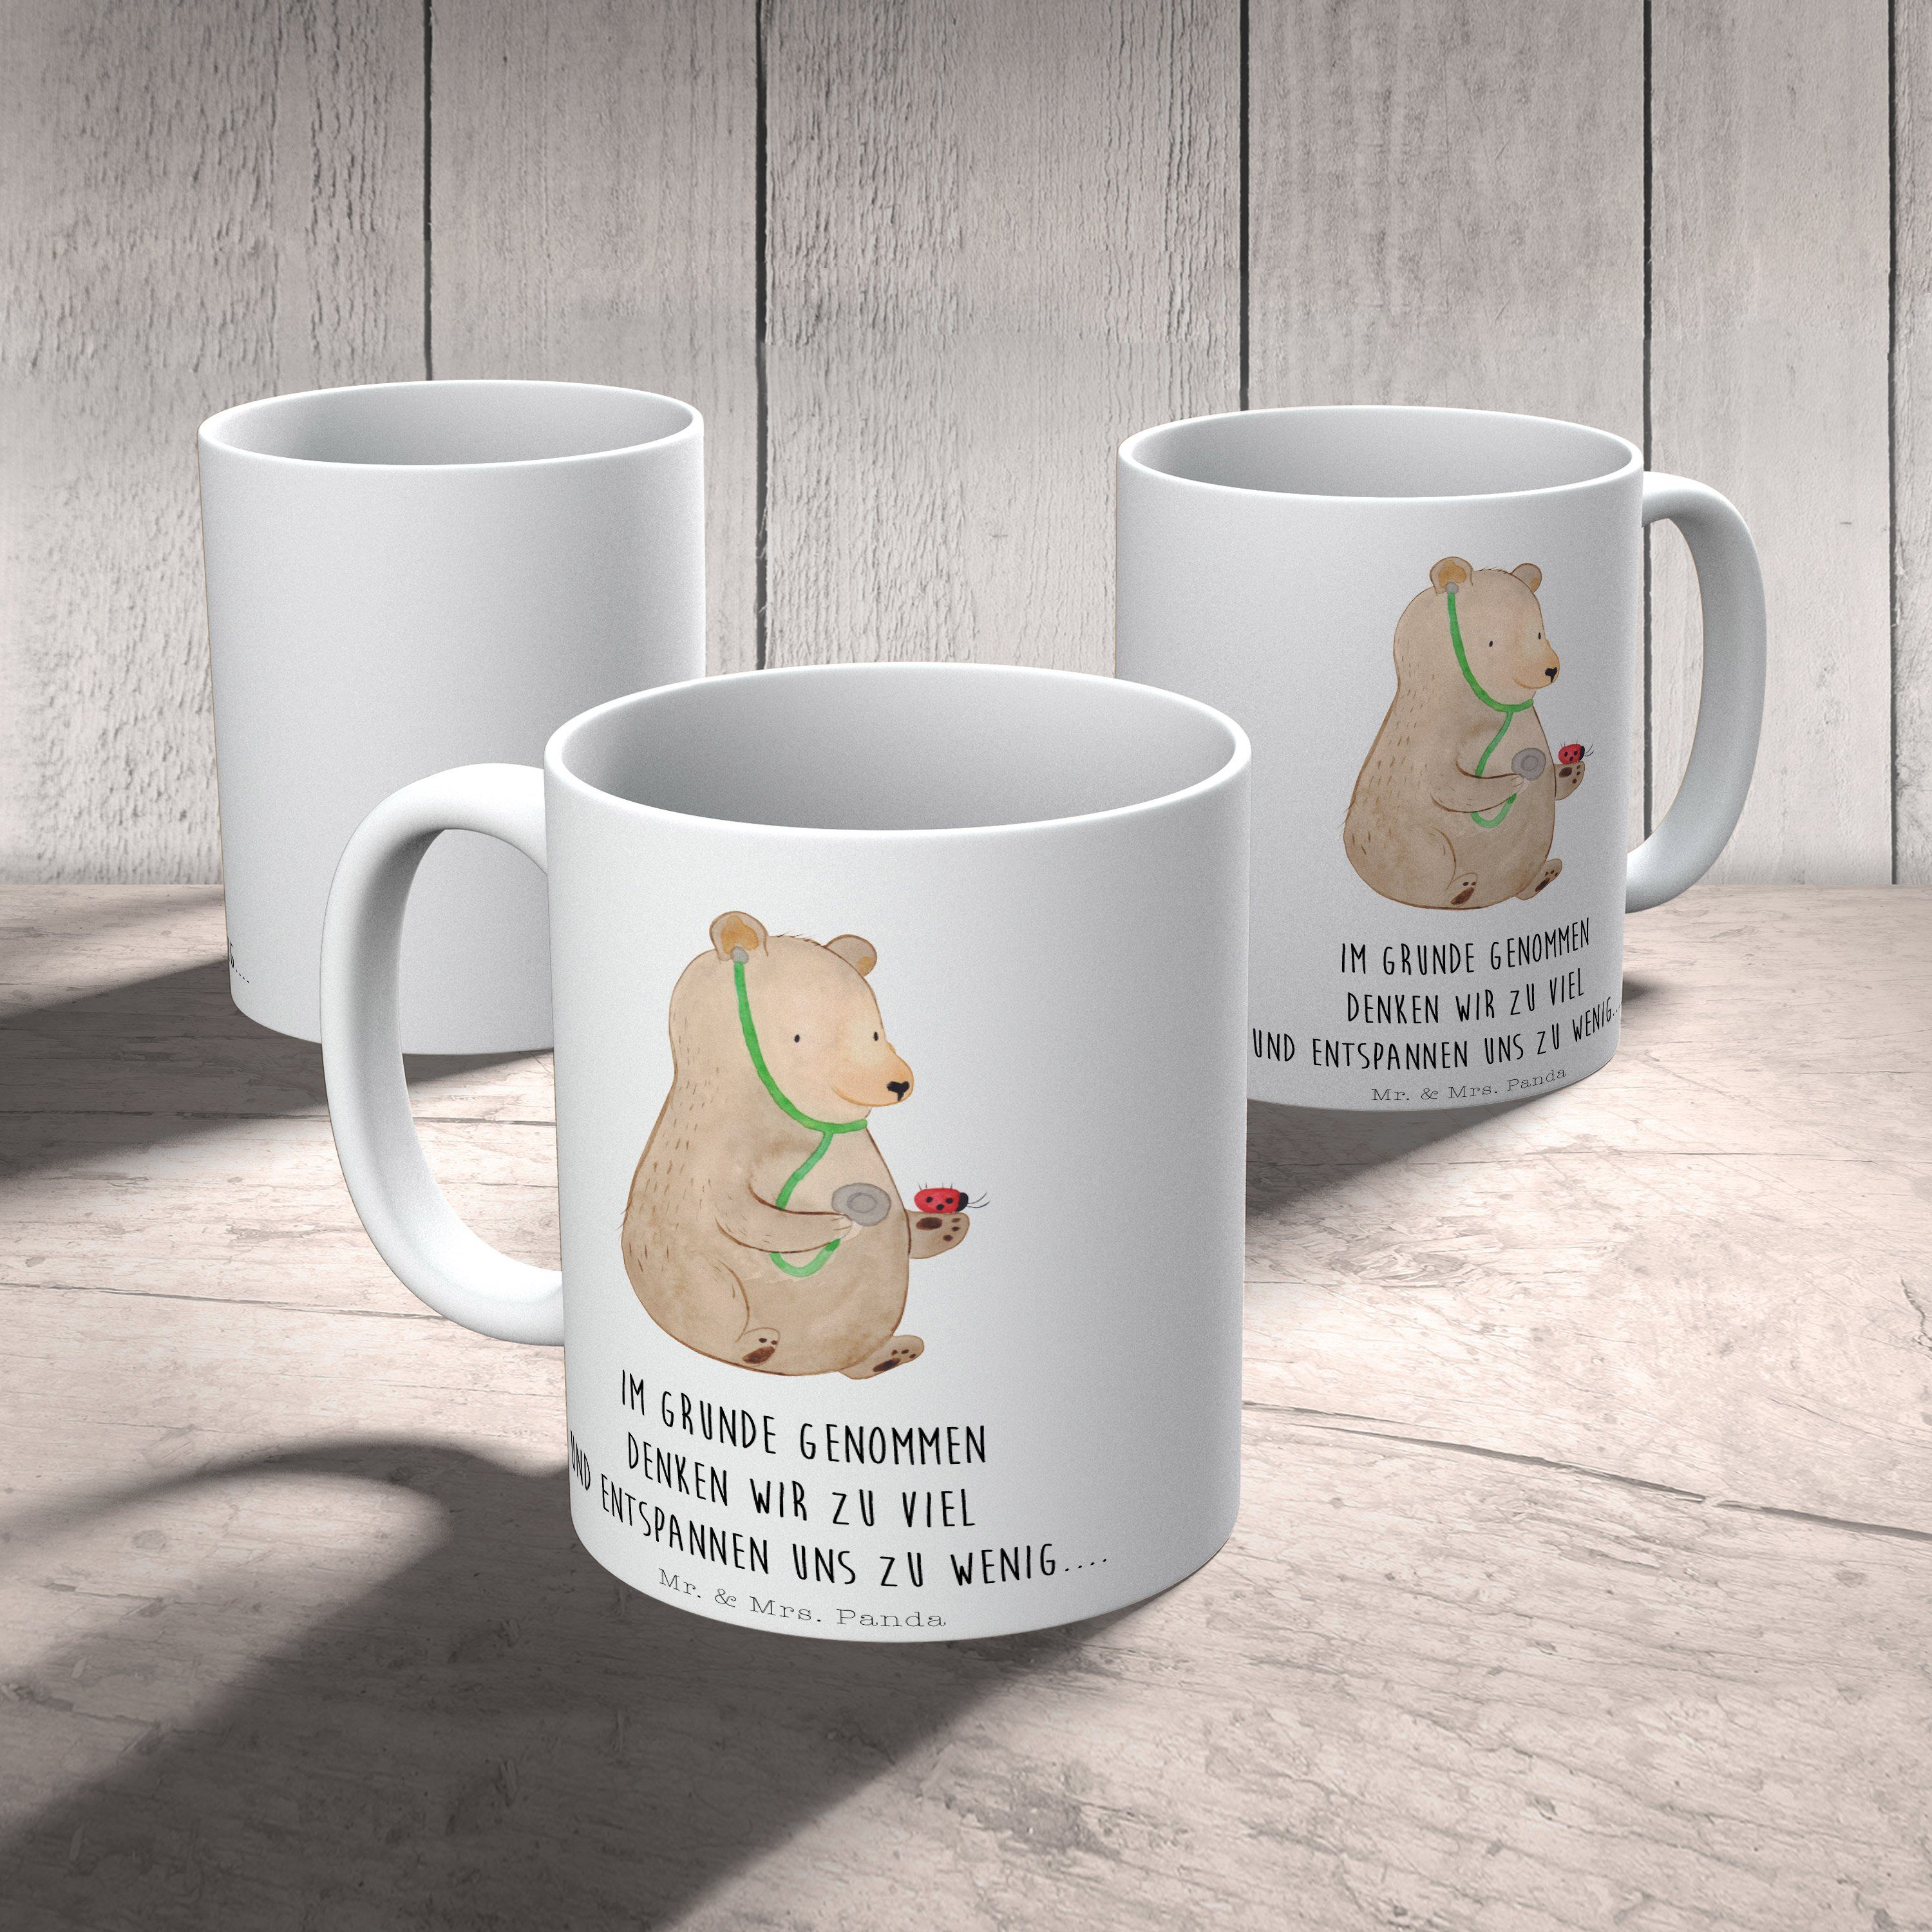 Mr. & Mrs. Panda Tasse, - Keramik Kaffeetasse, Tasse Geschenk, Geschenk Bär Weiß Porzellantas, Arzt 